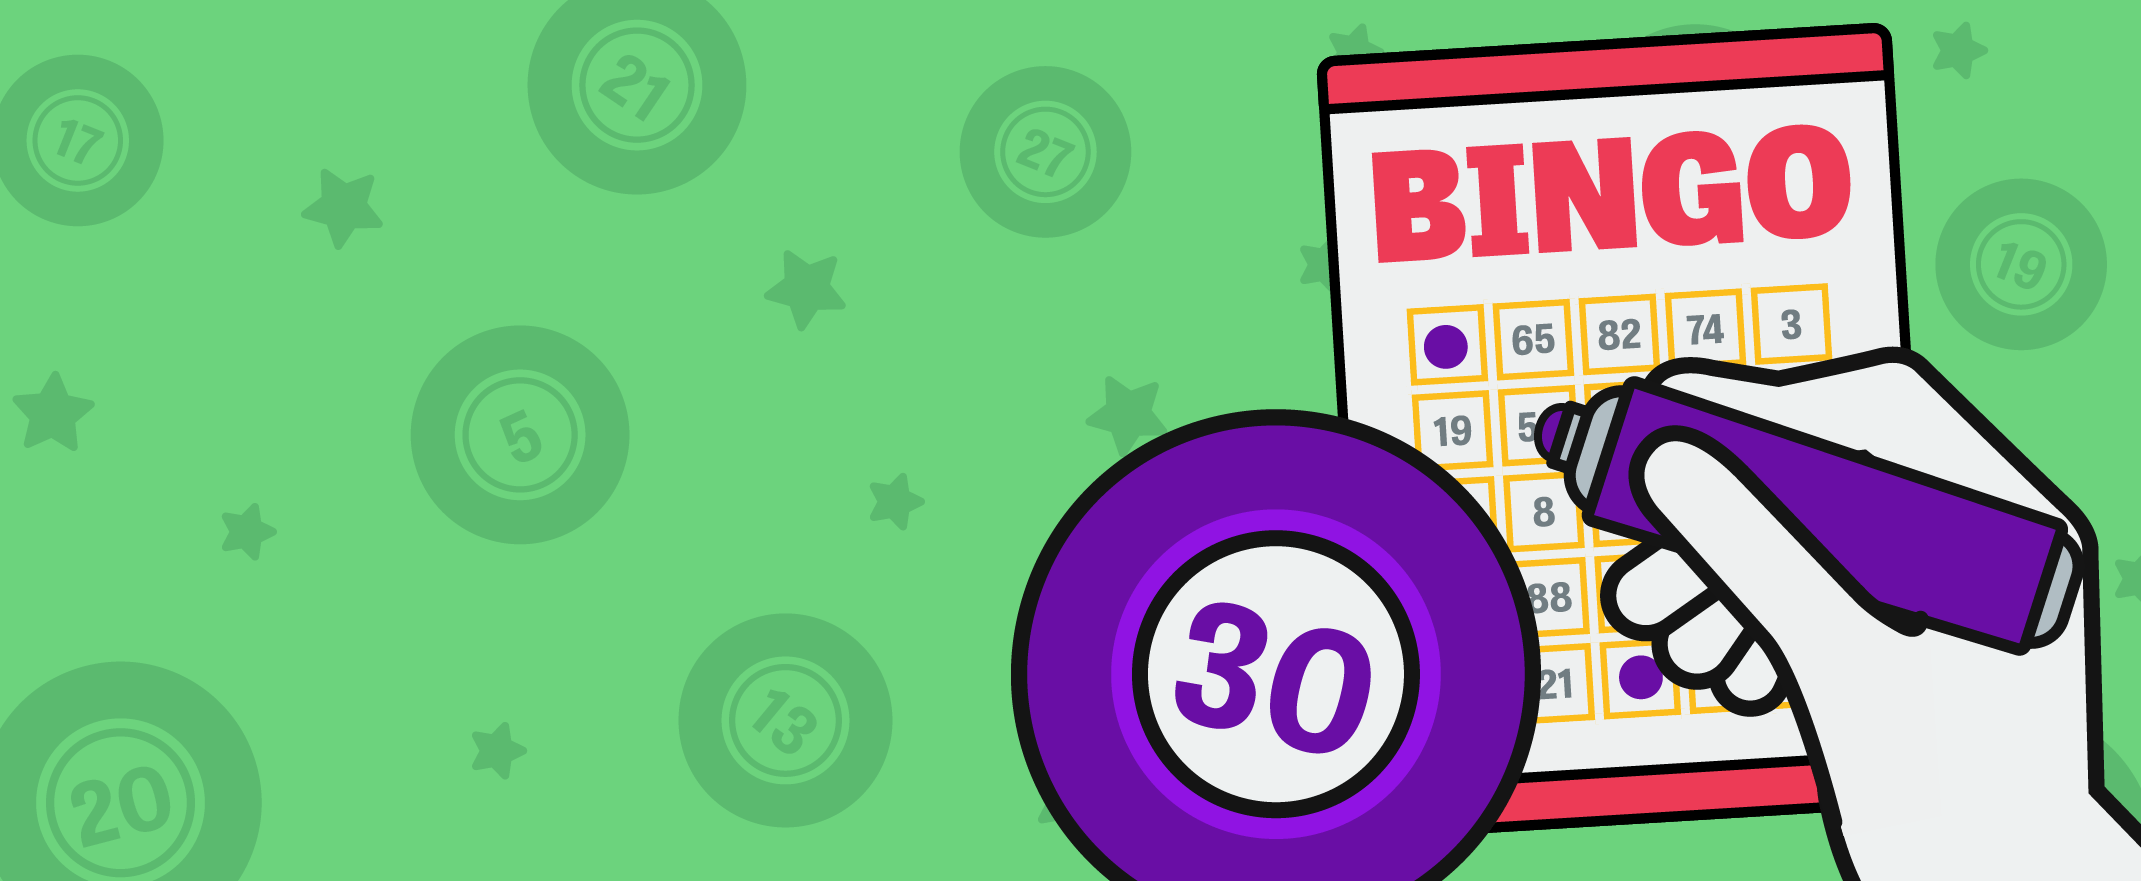 Popular bingo variants - 30 ball bingo